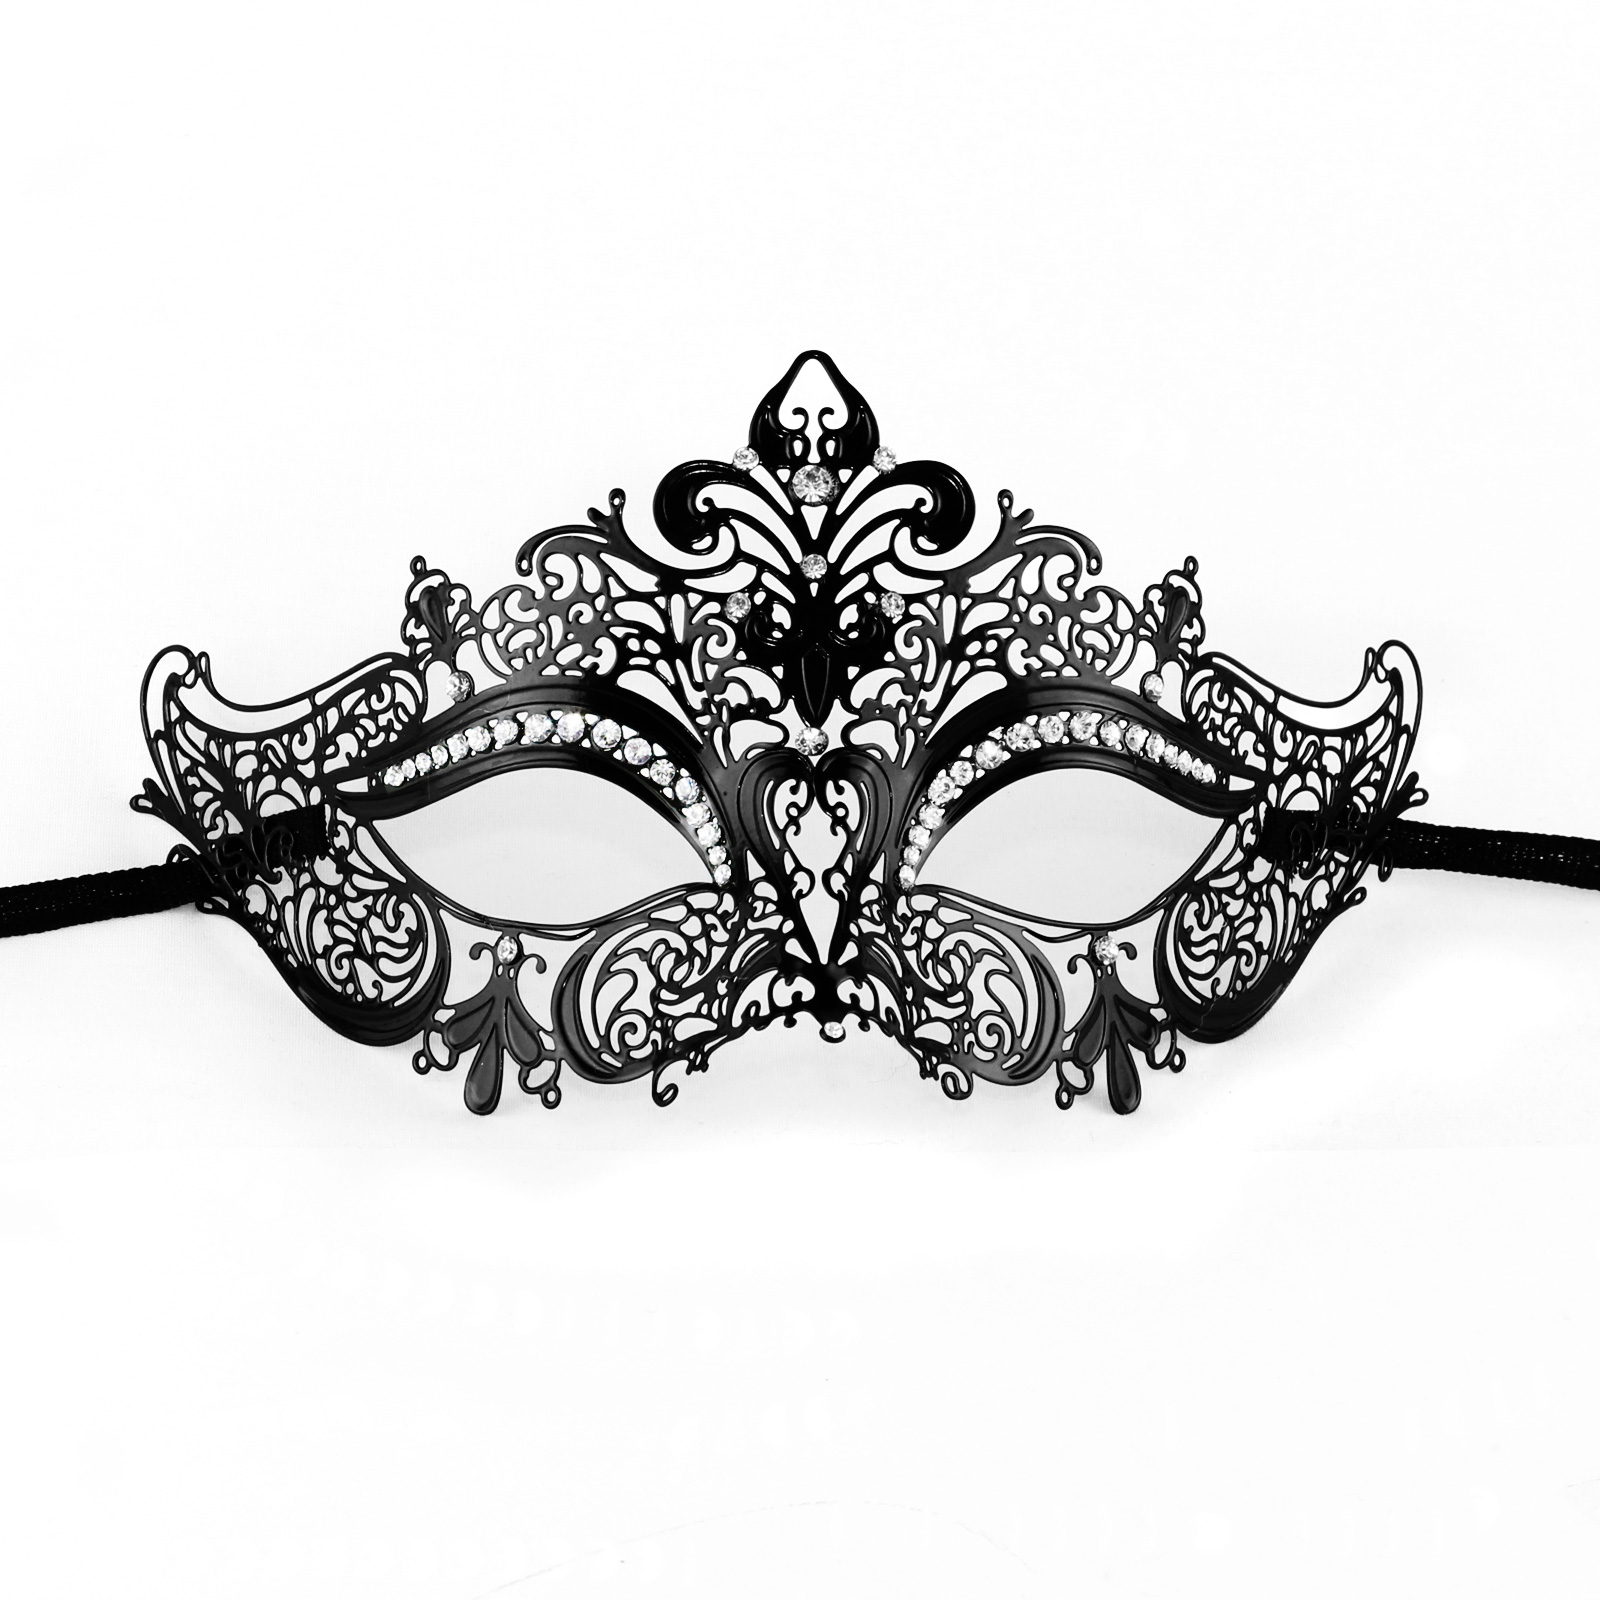 Venetian Design Mardi Gras Metal Masquerade Mask Dress Up Party Ball